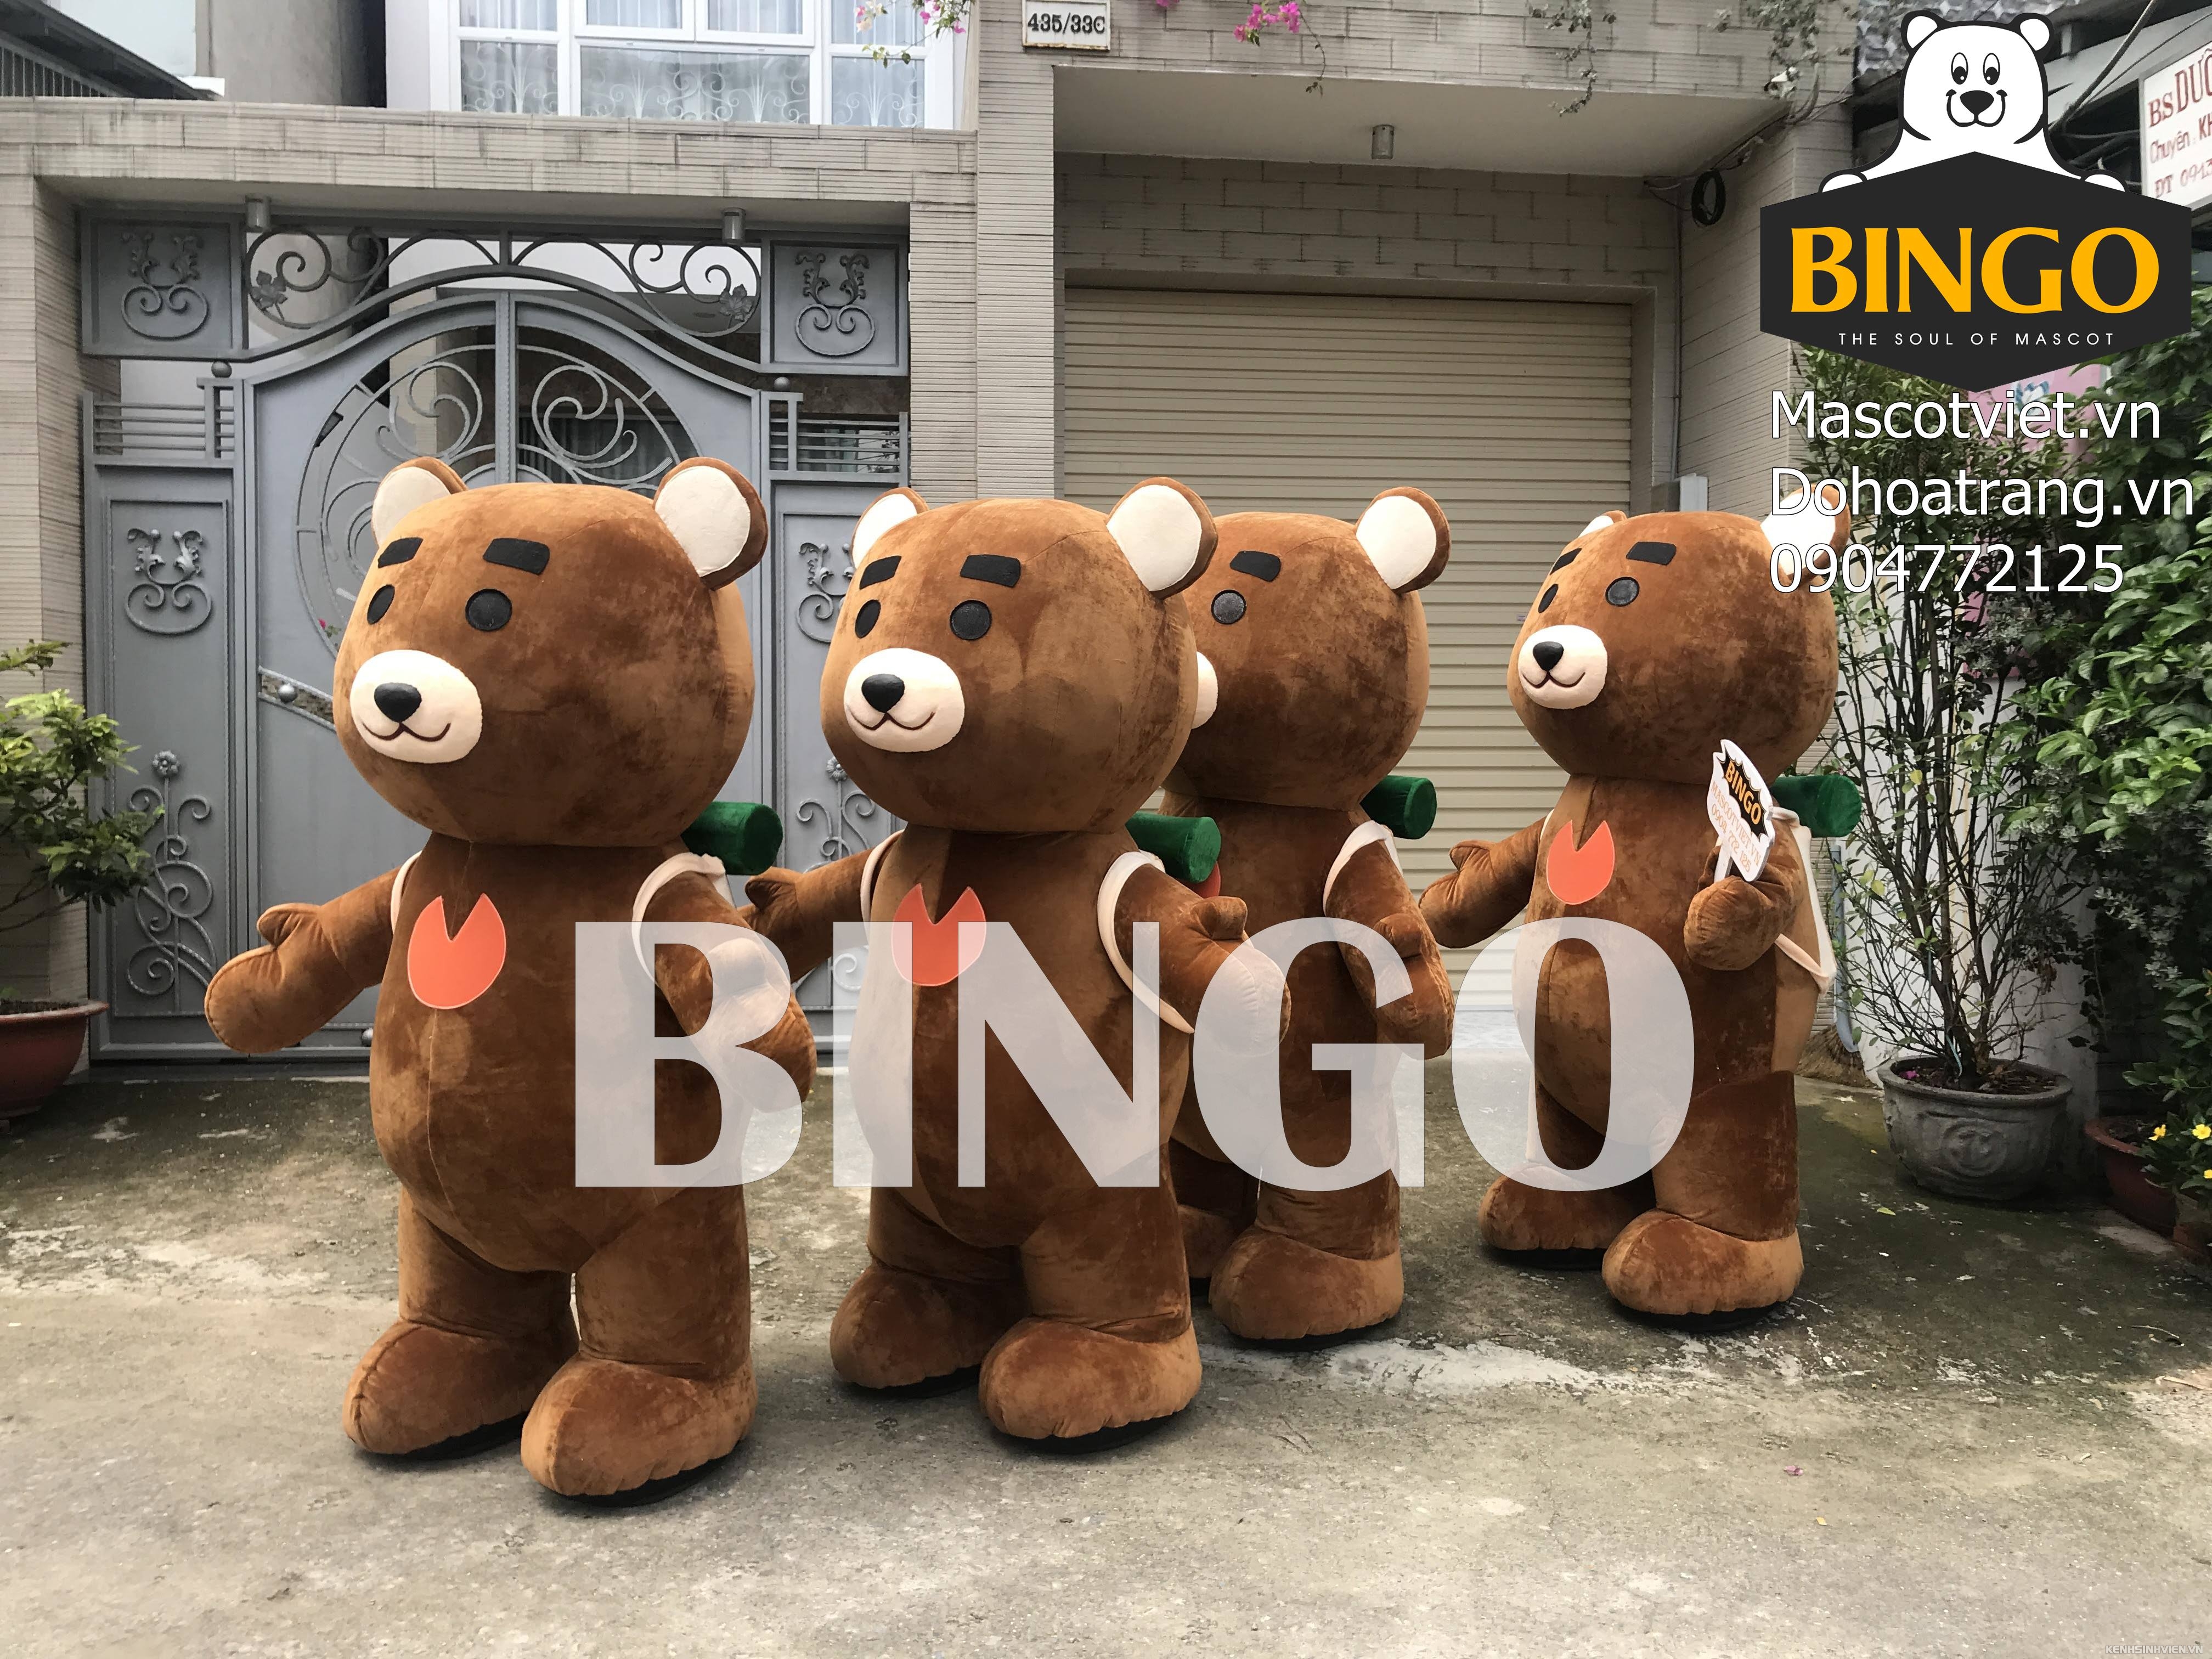 mascot-hoi-con-gau-01-bingo-costumes-0904772125-3-.jpg